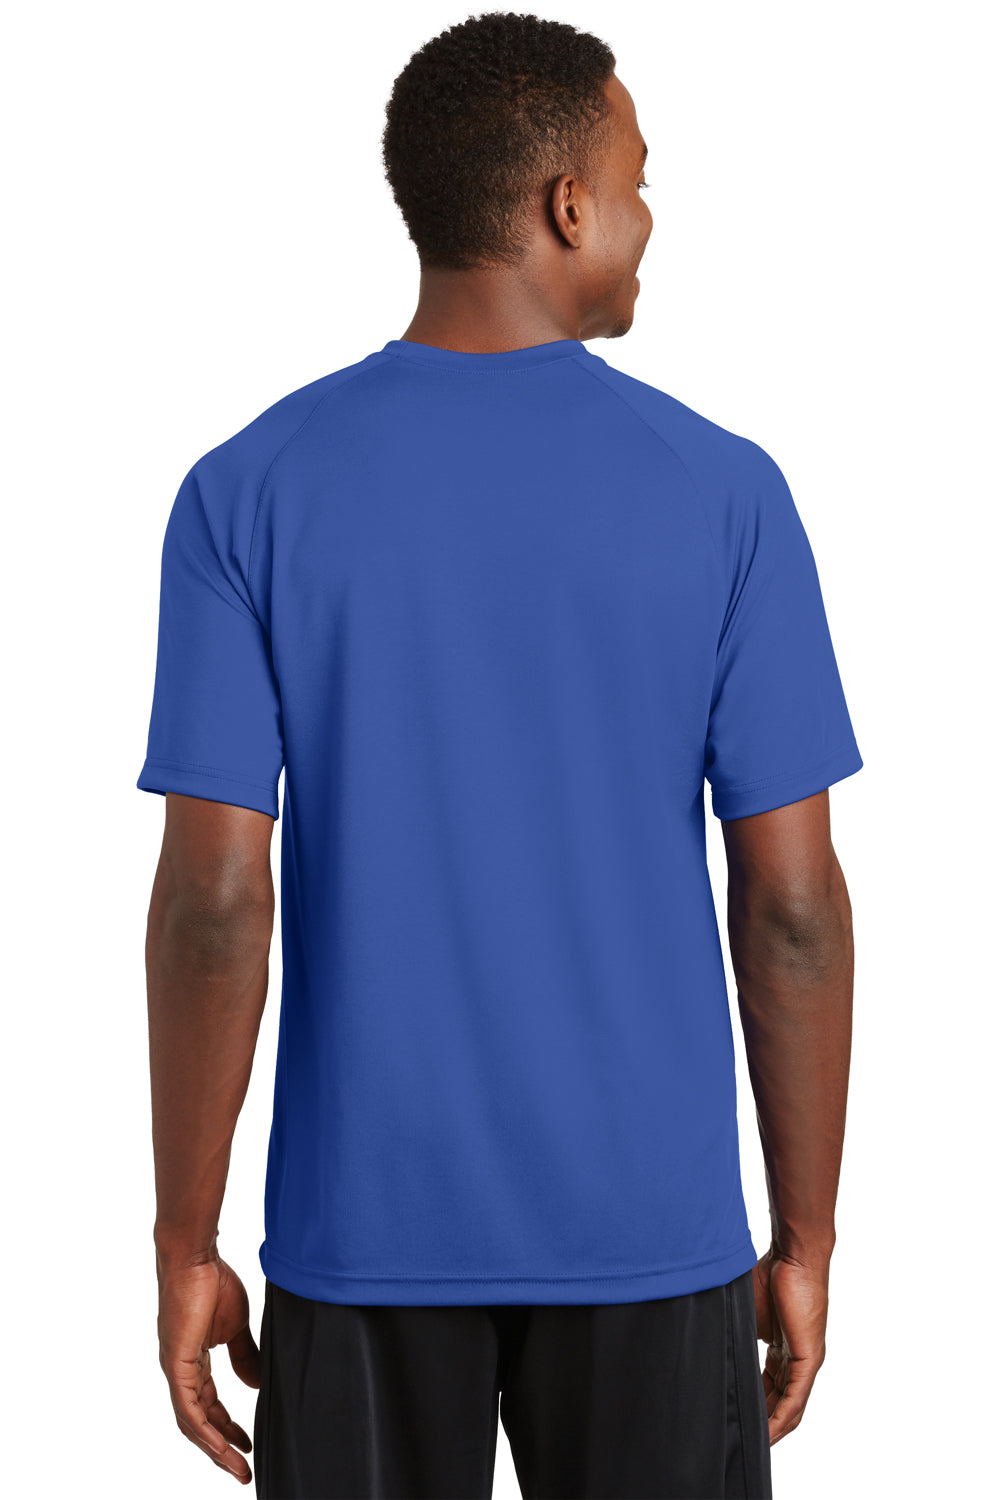 Sport-Tek T473 Mens Dry Zone Moisture Wicking Short Sleeve Crewneck T-Shirt Royal Blue Back